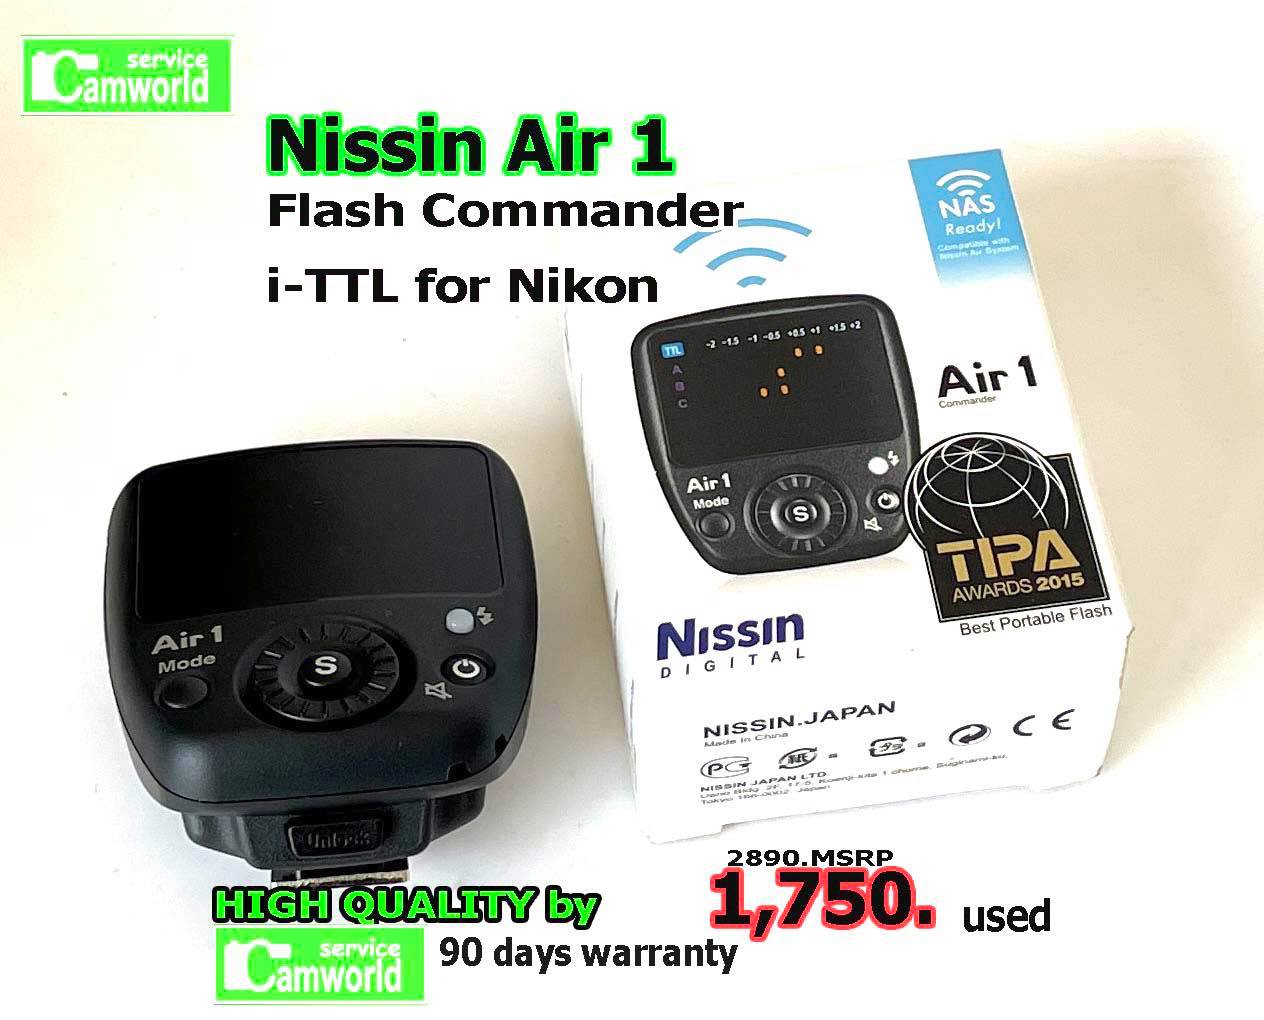 Nissin Air 1 Flash Commander i-TTL for Nikon - มือสอง สภาพดี เชื่อถือได้ มีรับประกันคุณภาพ 90 วัน